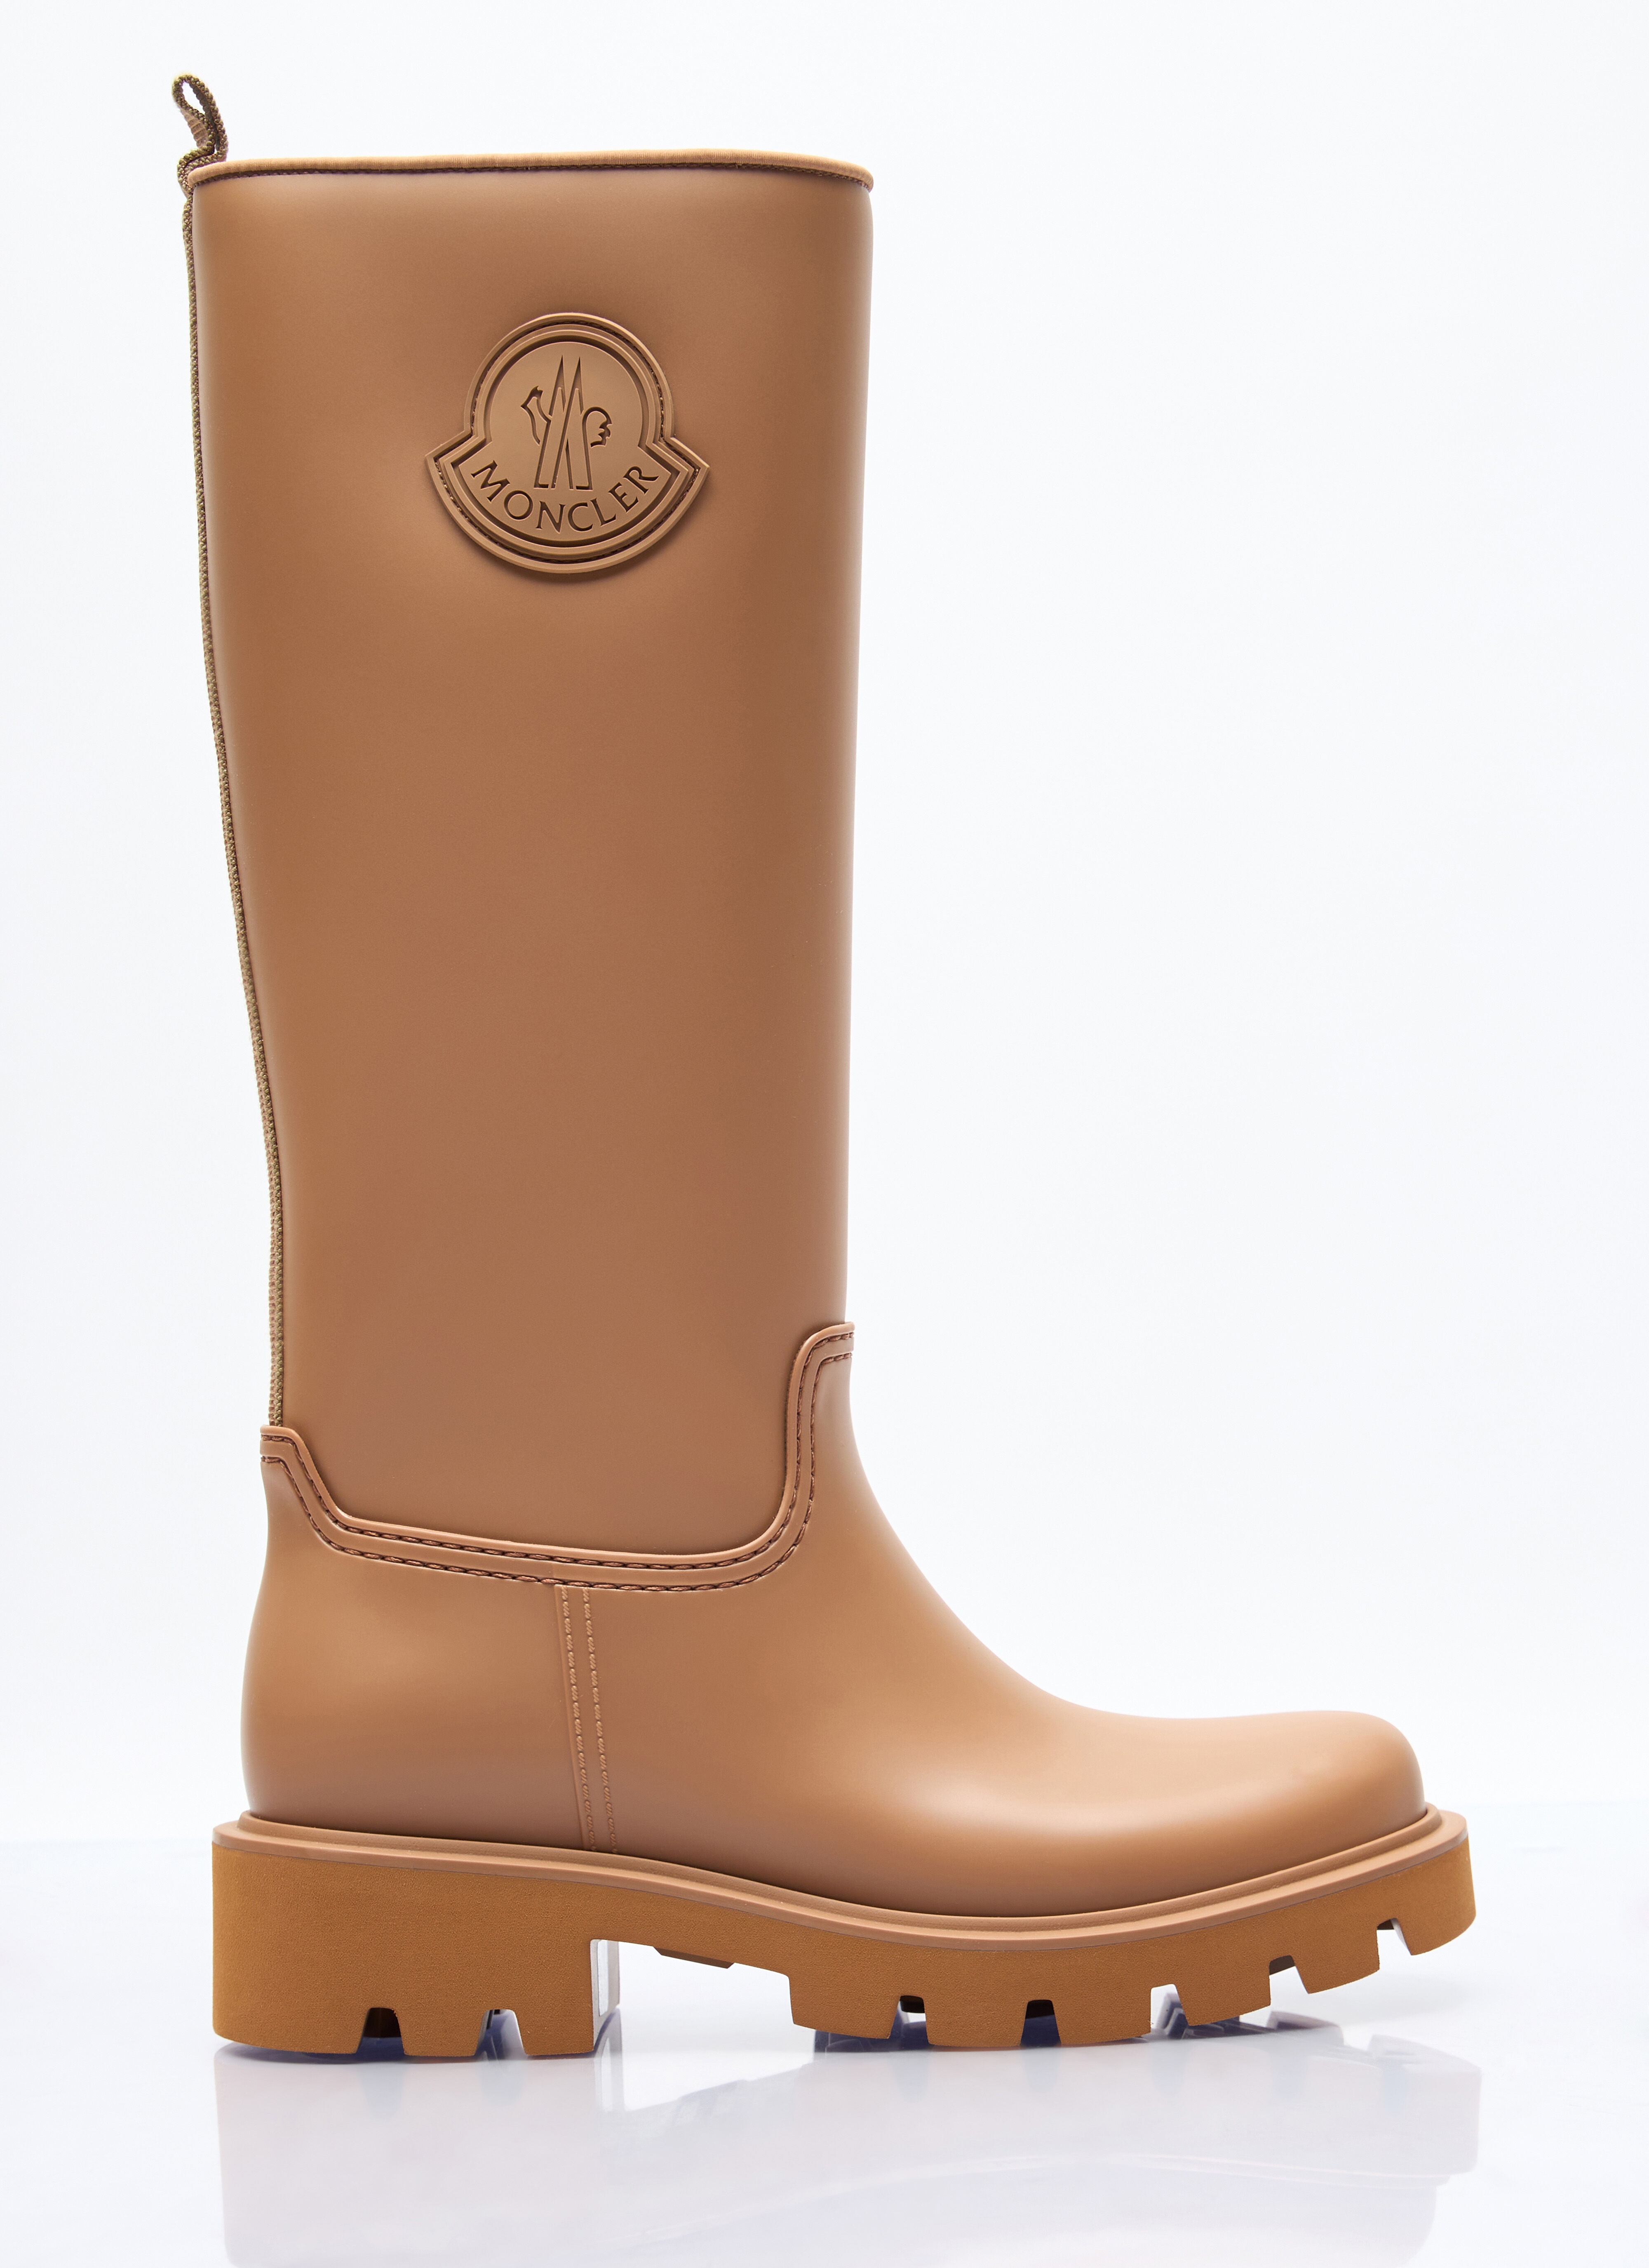 Moncler Kickstream High Rain Boots Camel mon0257001